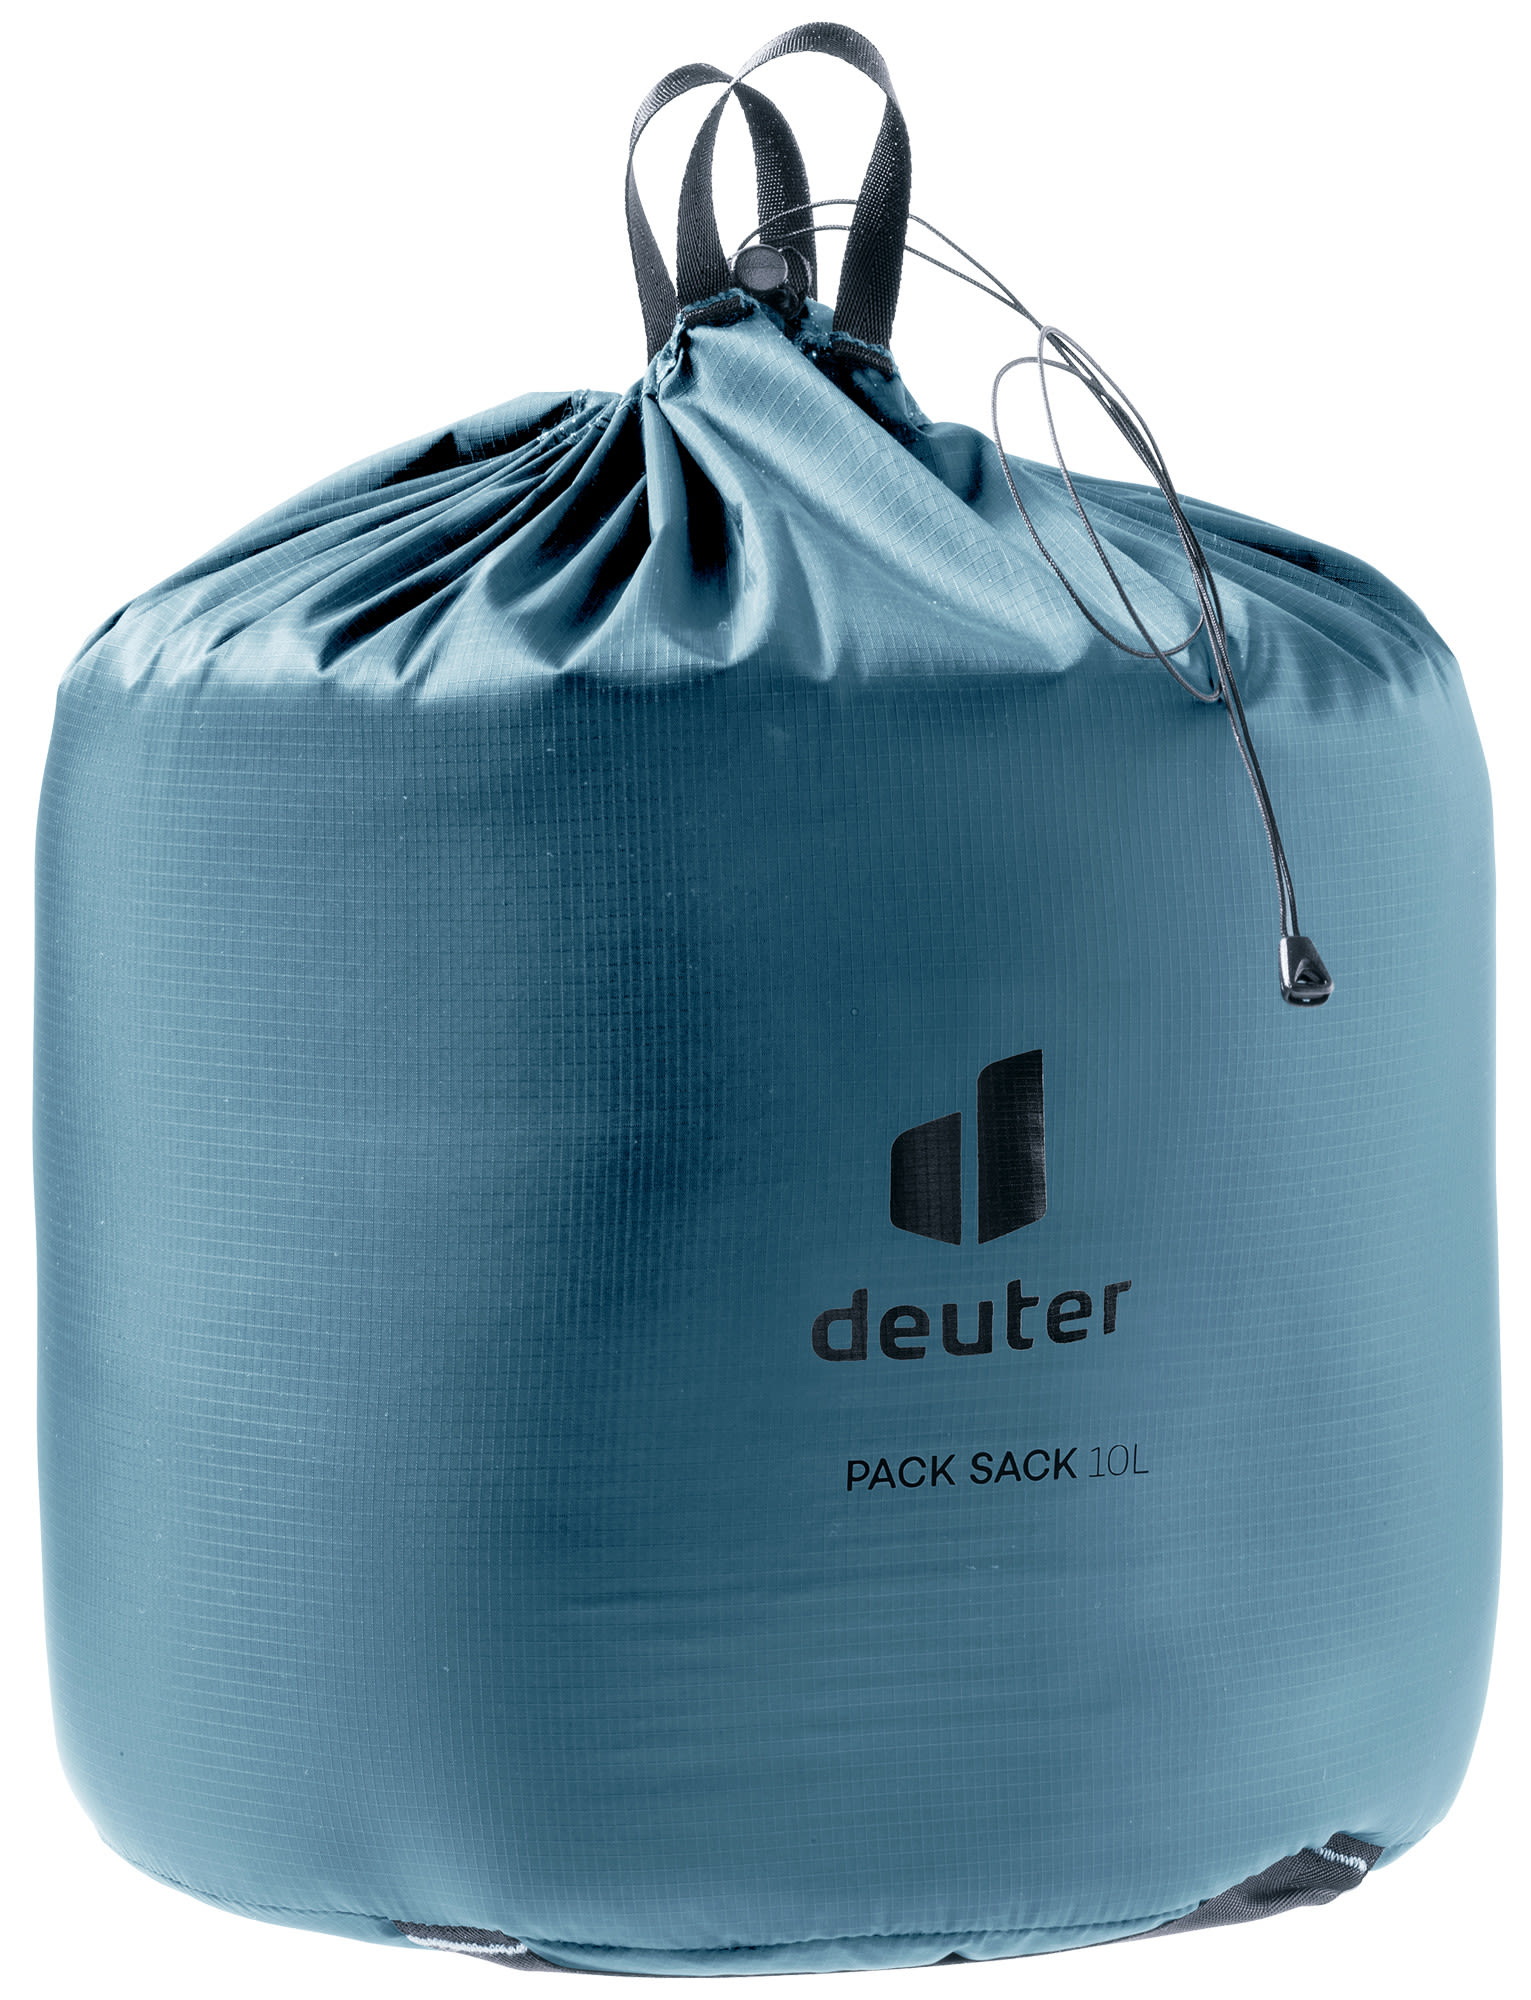 Deuter Leichter robuster Packsack, 10l. Farbe: Blau / Größe: 10l